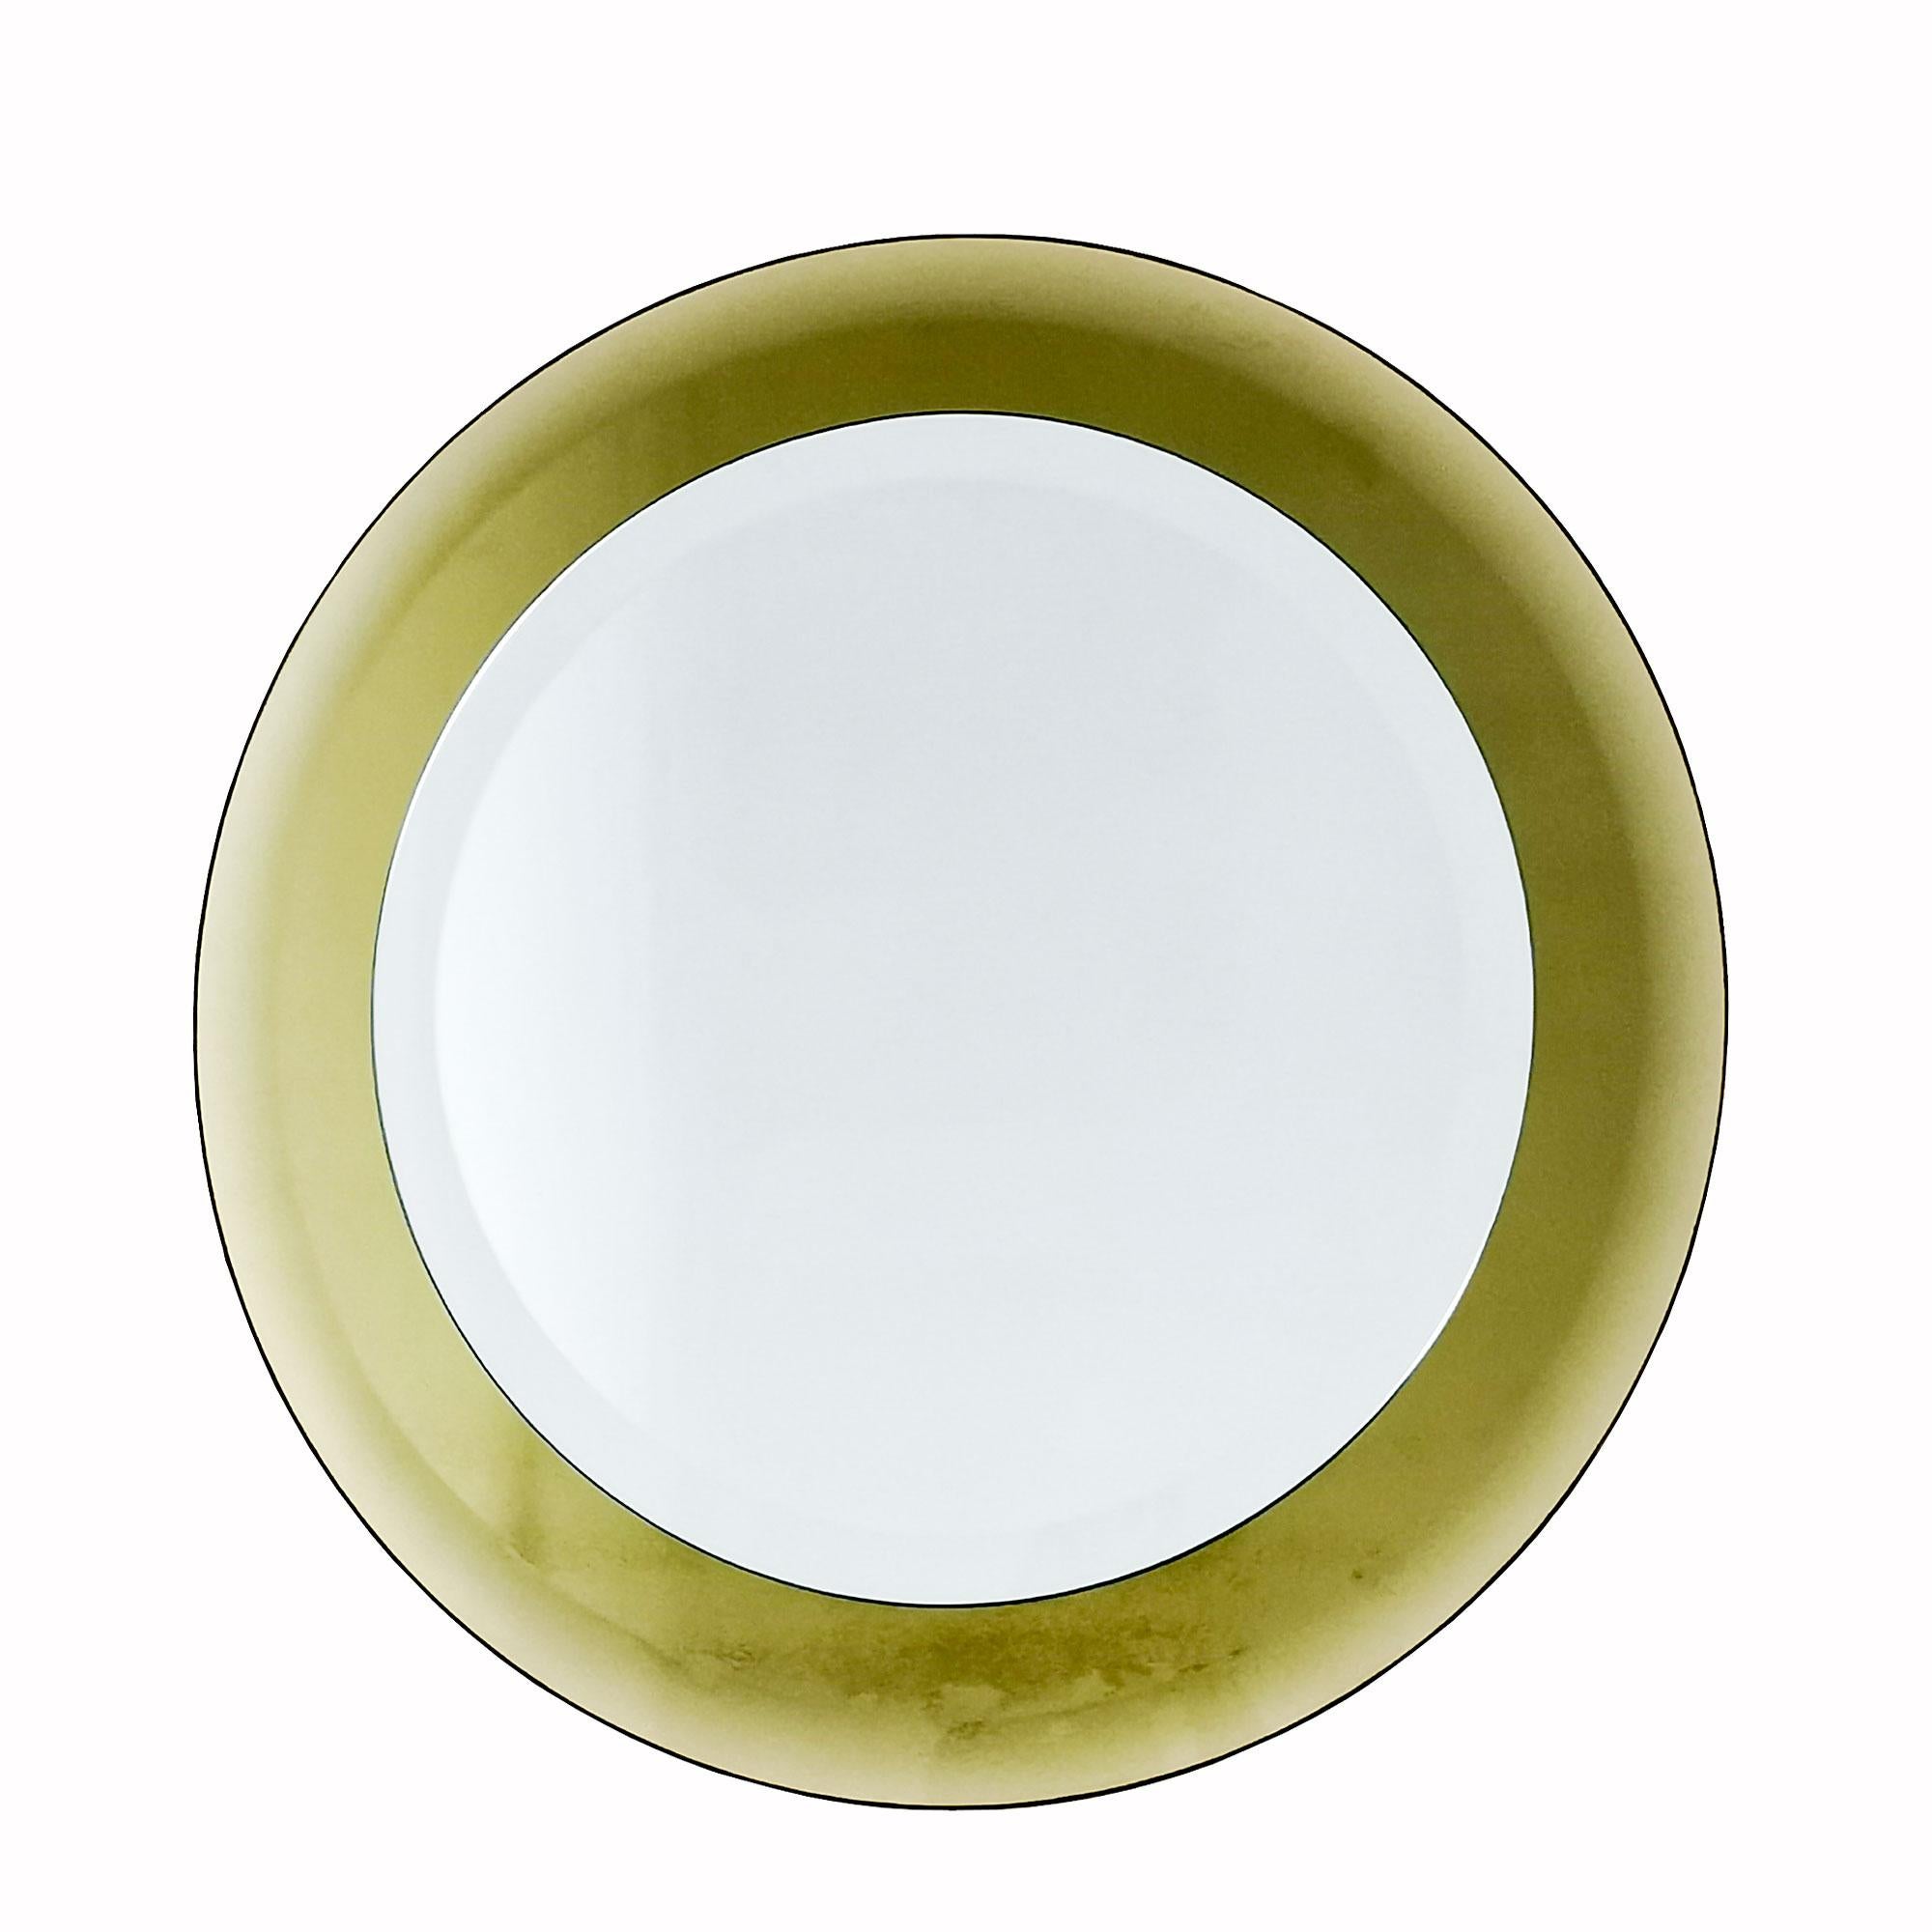 Italian Mid-Century Modern Round Golden-Yellow Beveled Framed Mirror - Italy